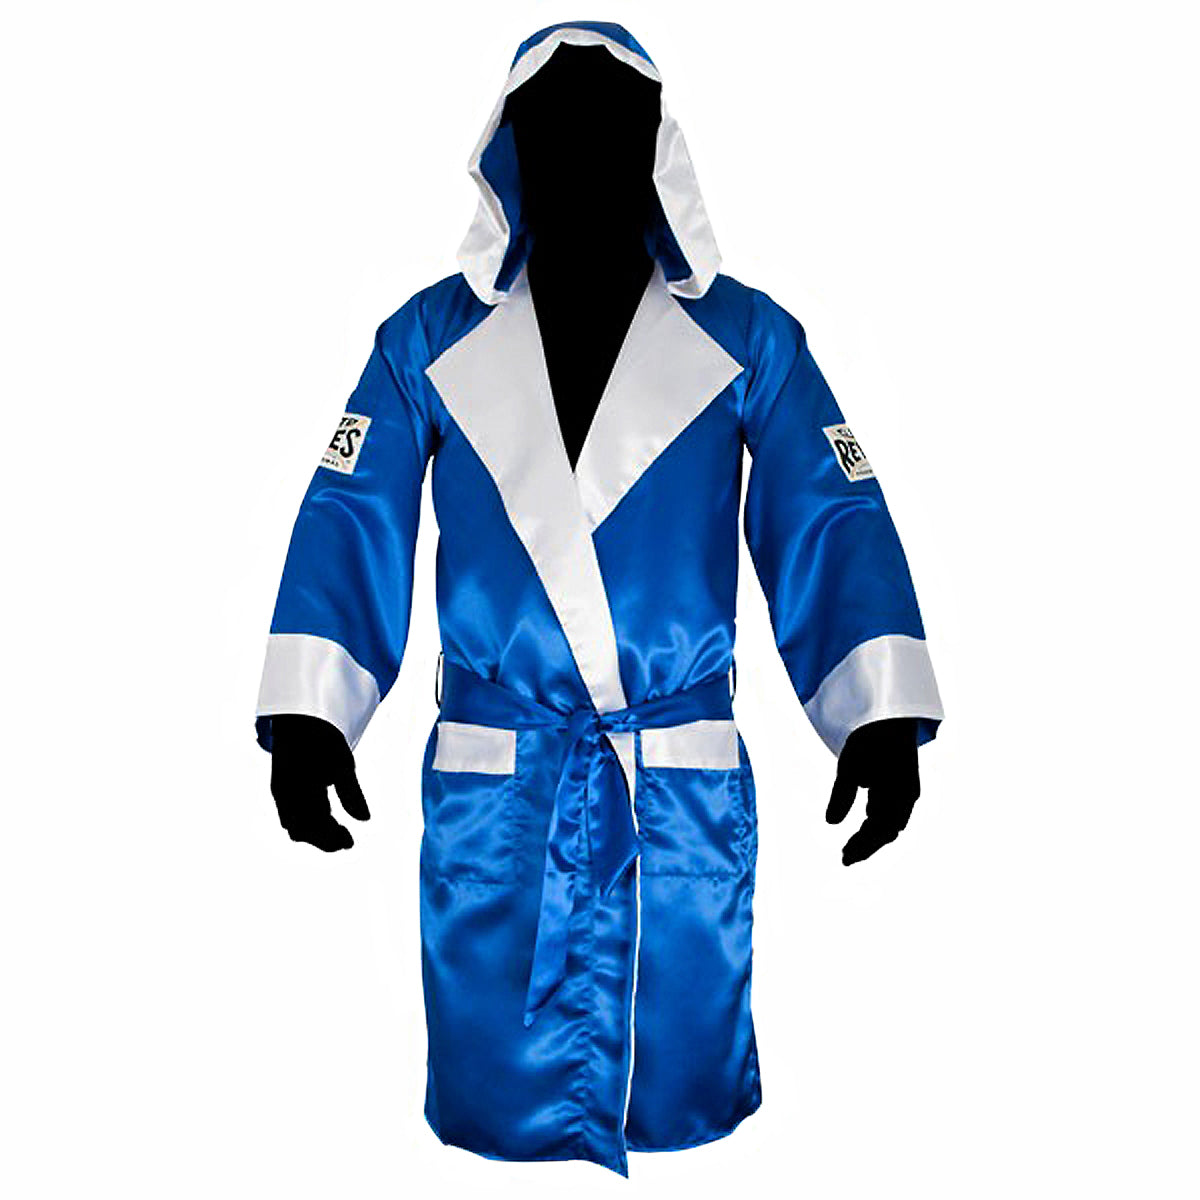 Cleto Reyes Satin Boxing Robe with Hood - XL - Blue/White Cleto Reyes